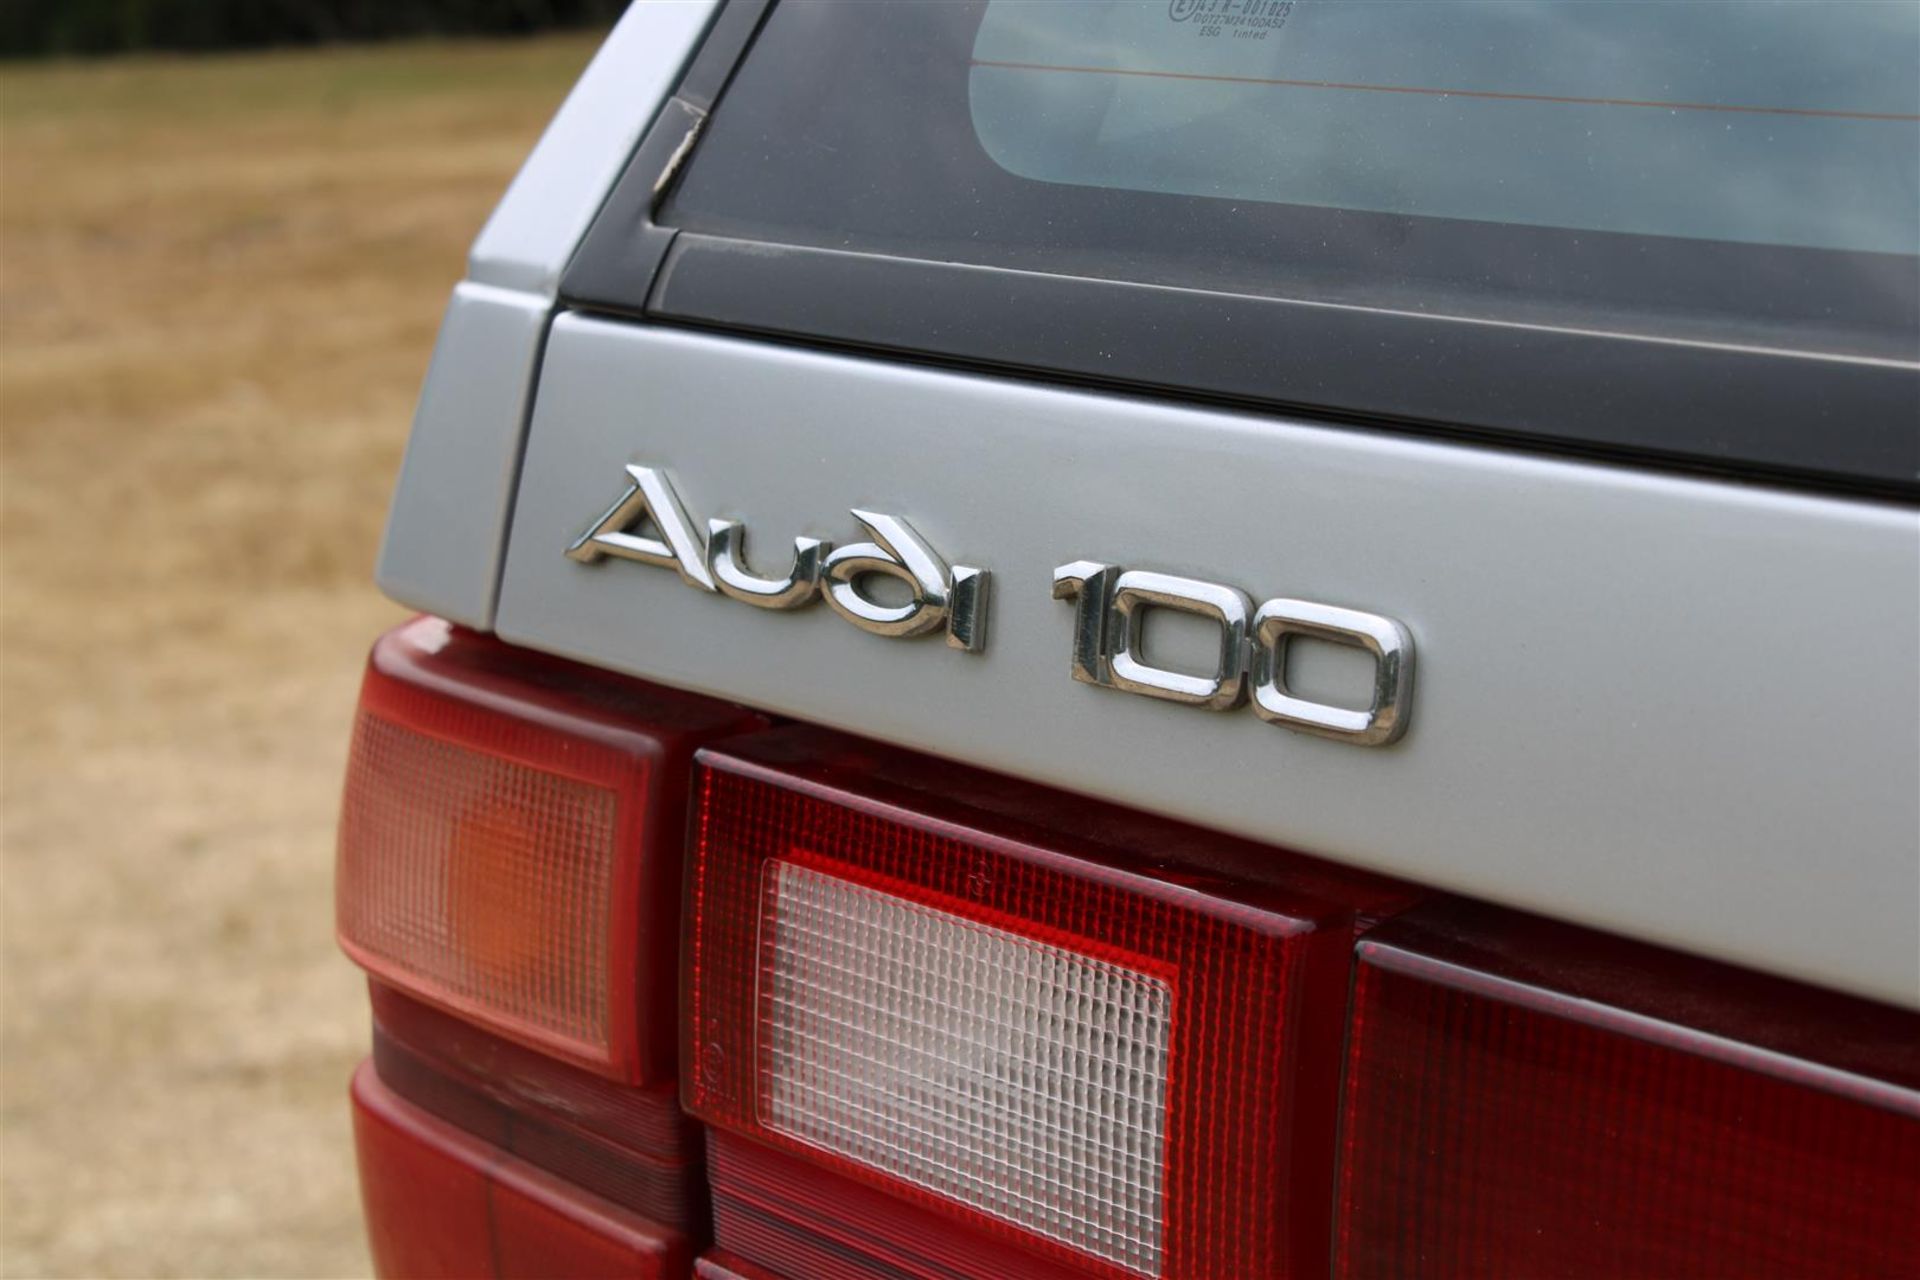 1990 Audi 100 Avant Turbo Auto Estate - Image 21 of 21